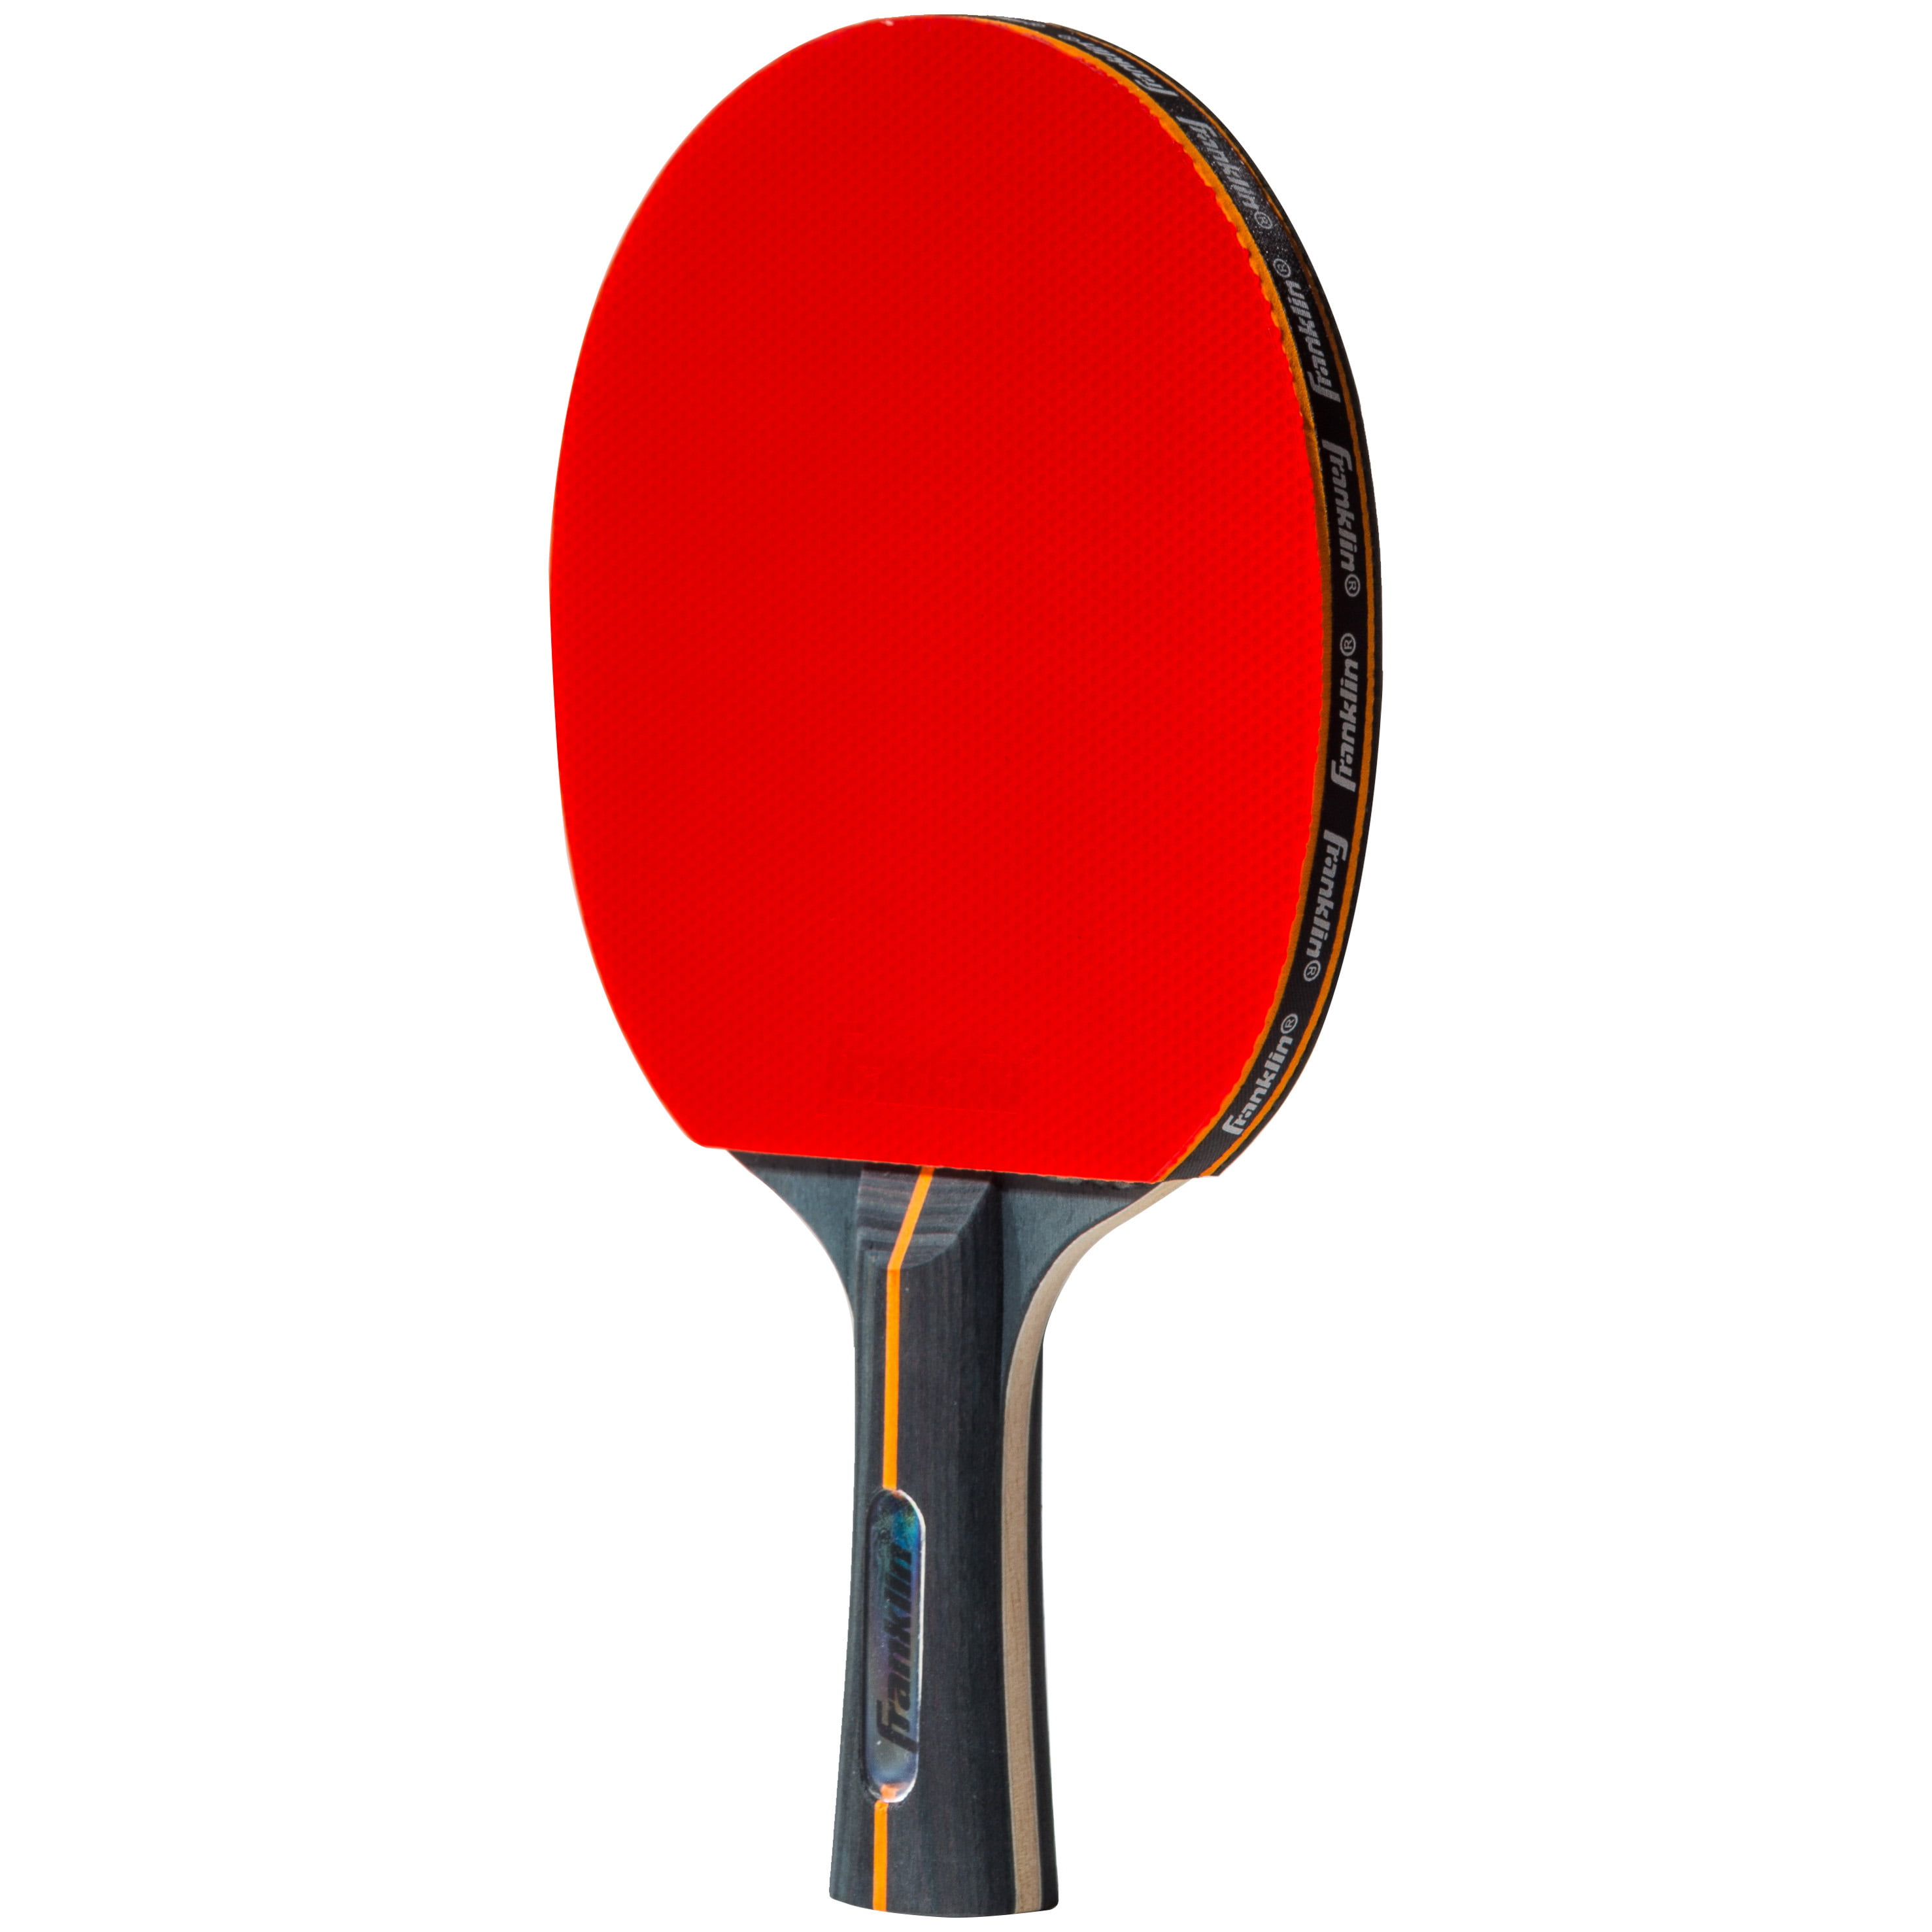 Professional Table Tennis Ping Pong Racket Paddle Bat 5 Layers Shakehand/Penhold 